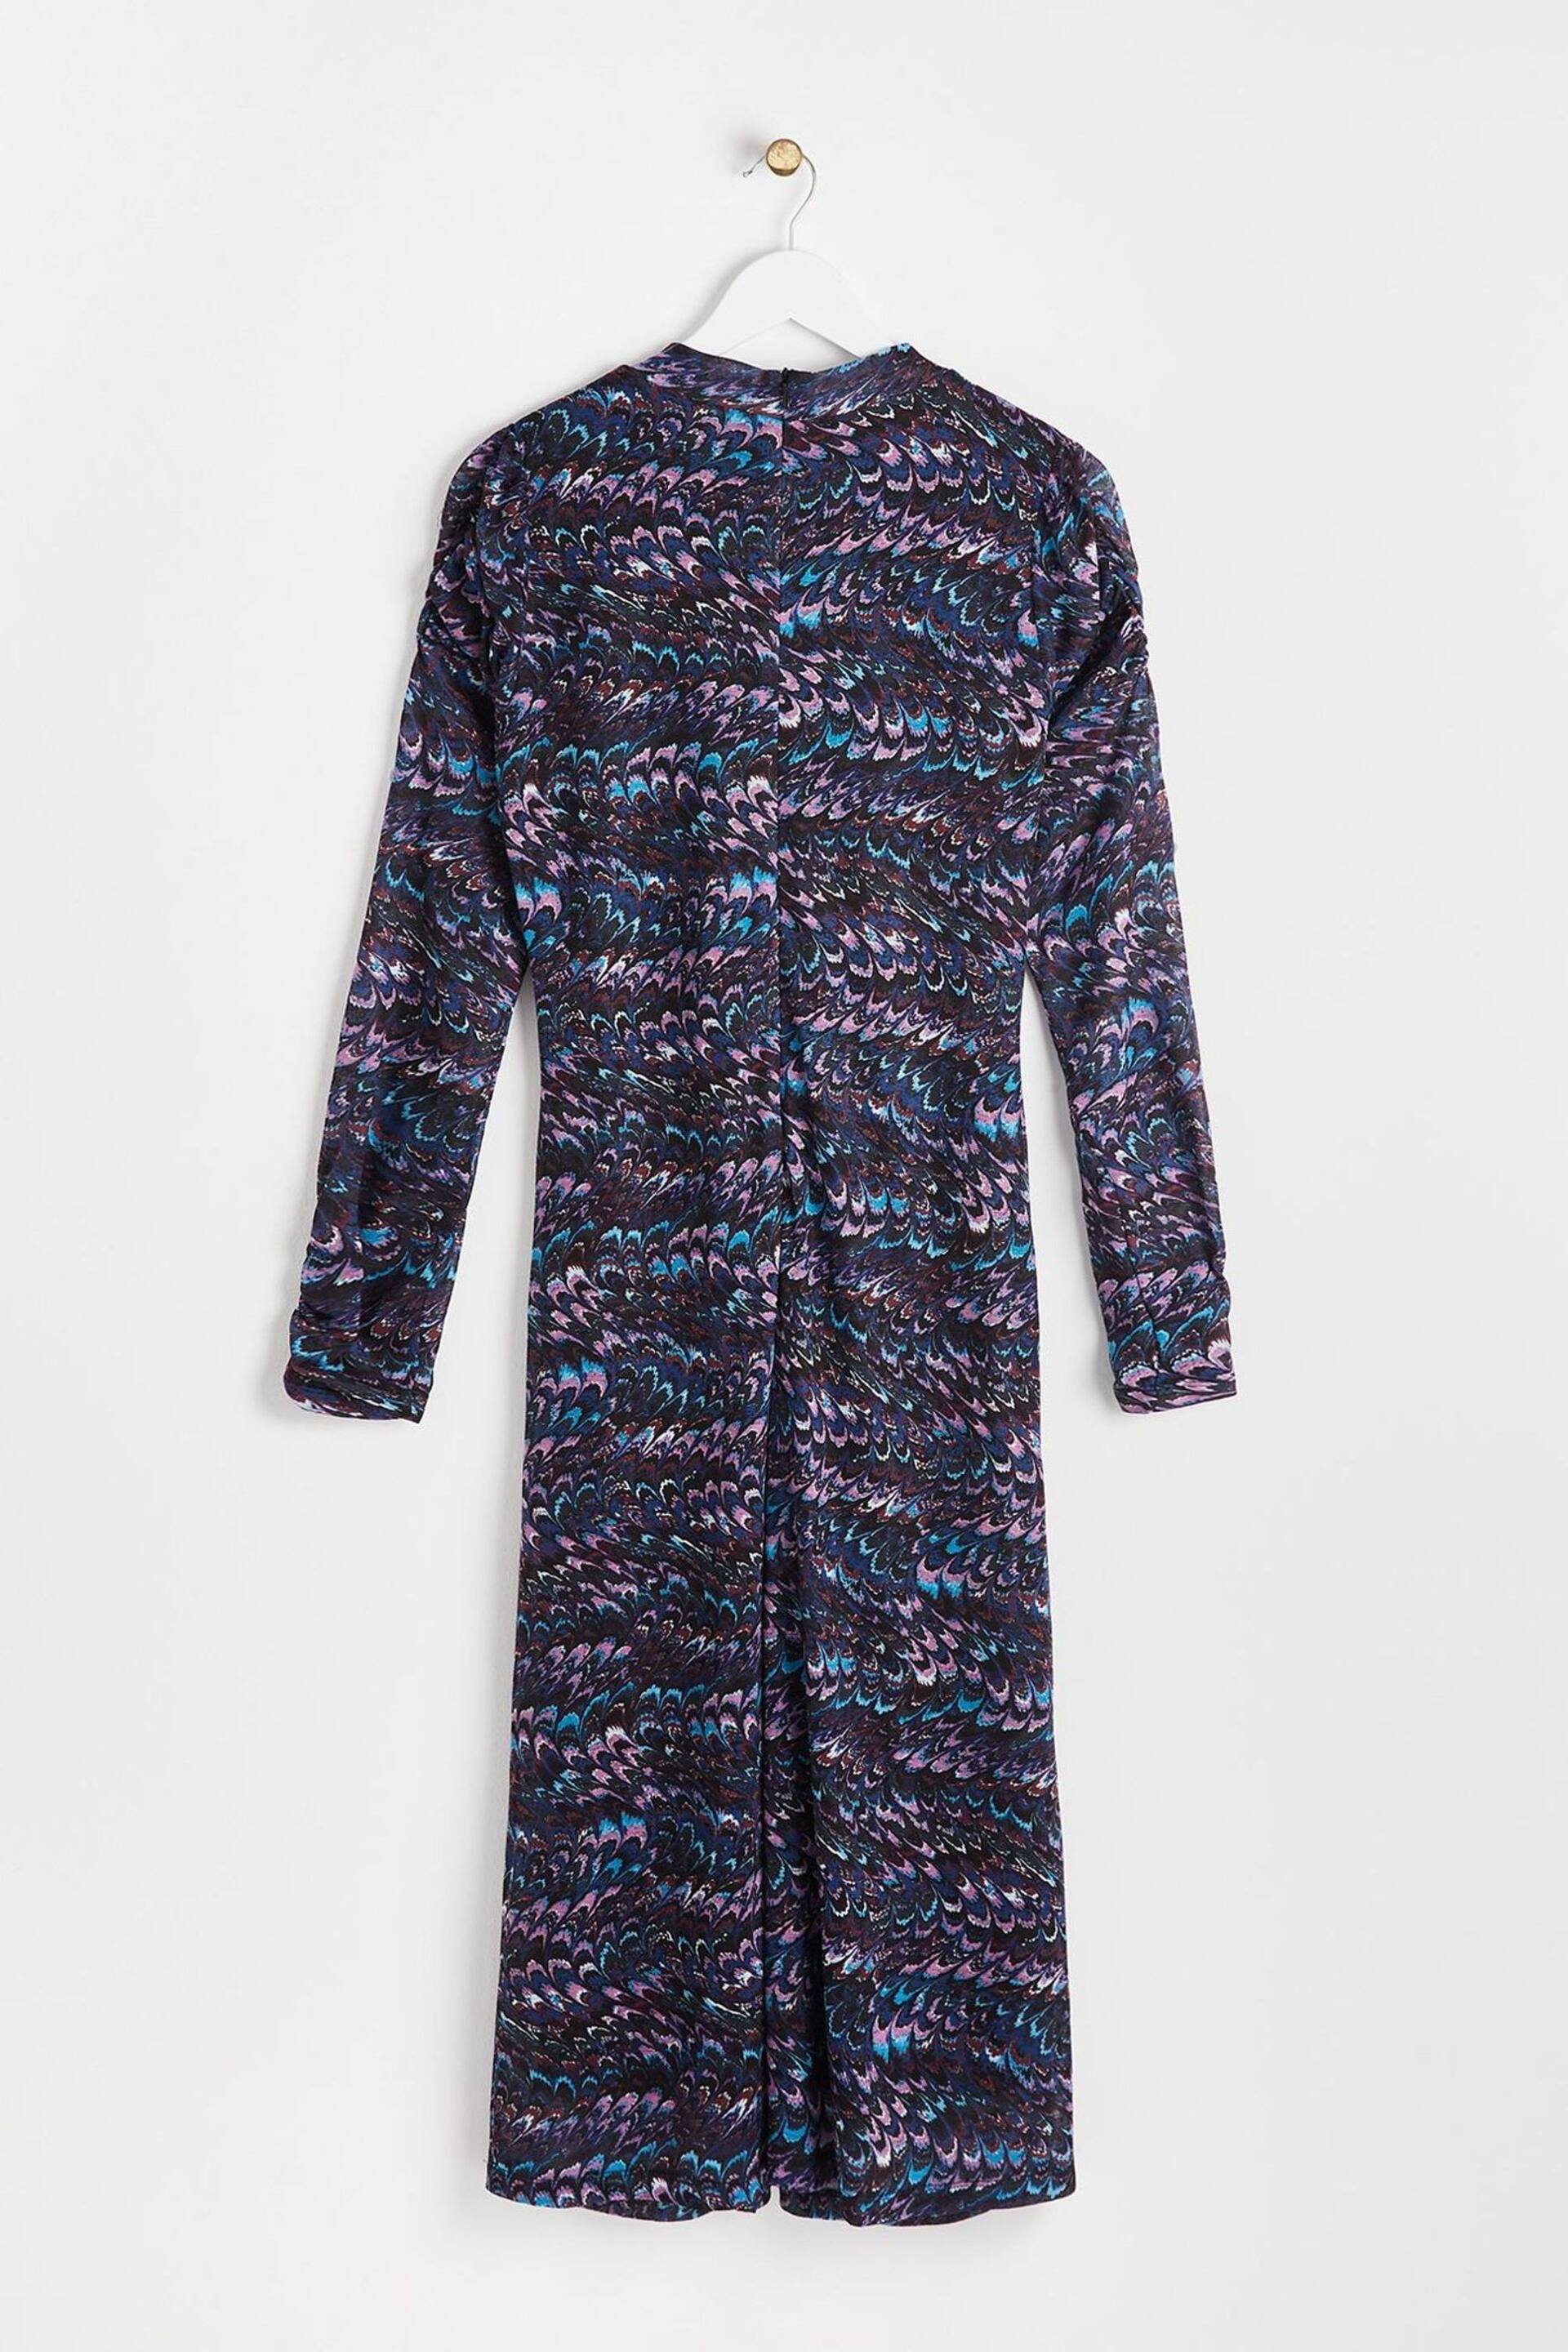 Oliver Bonas Blue Feather Print Mesh Midi Dress - Image 5 of 8